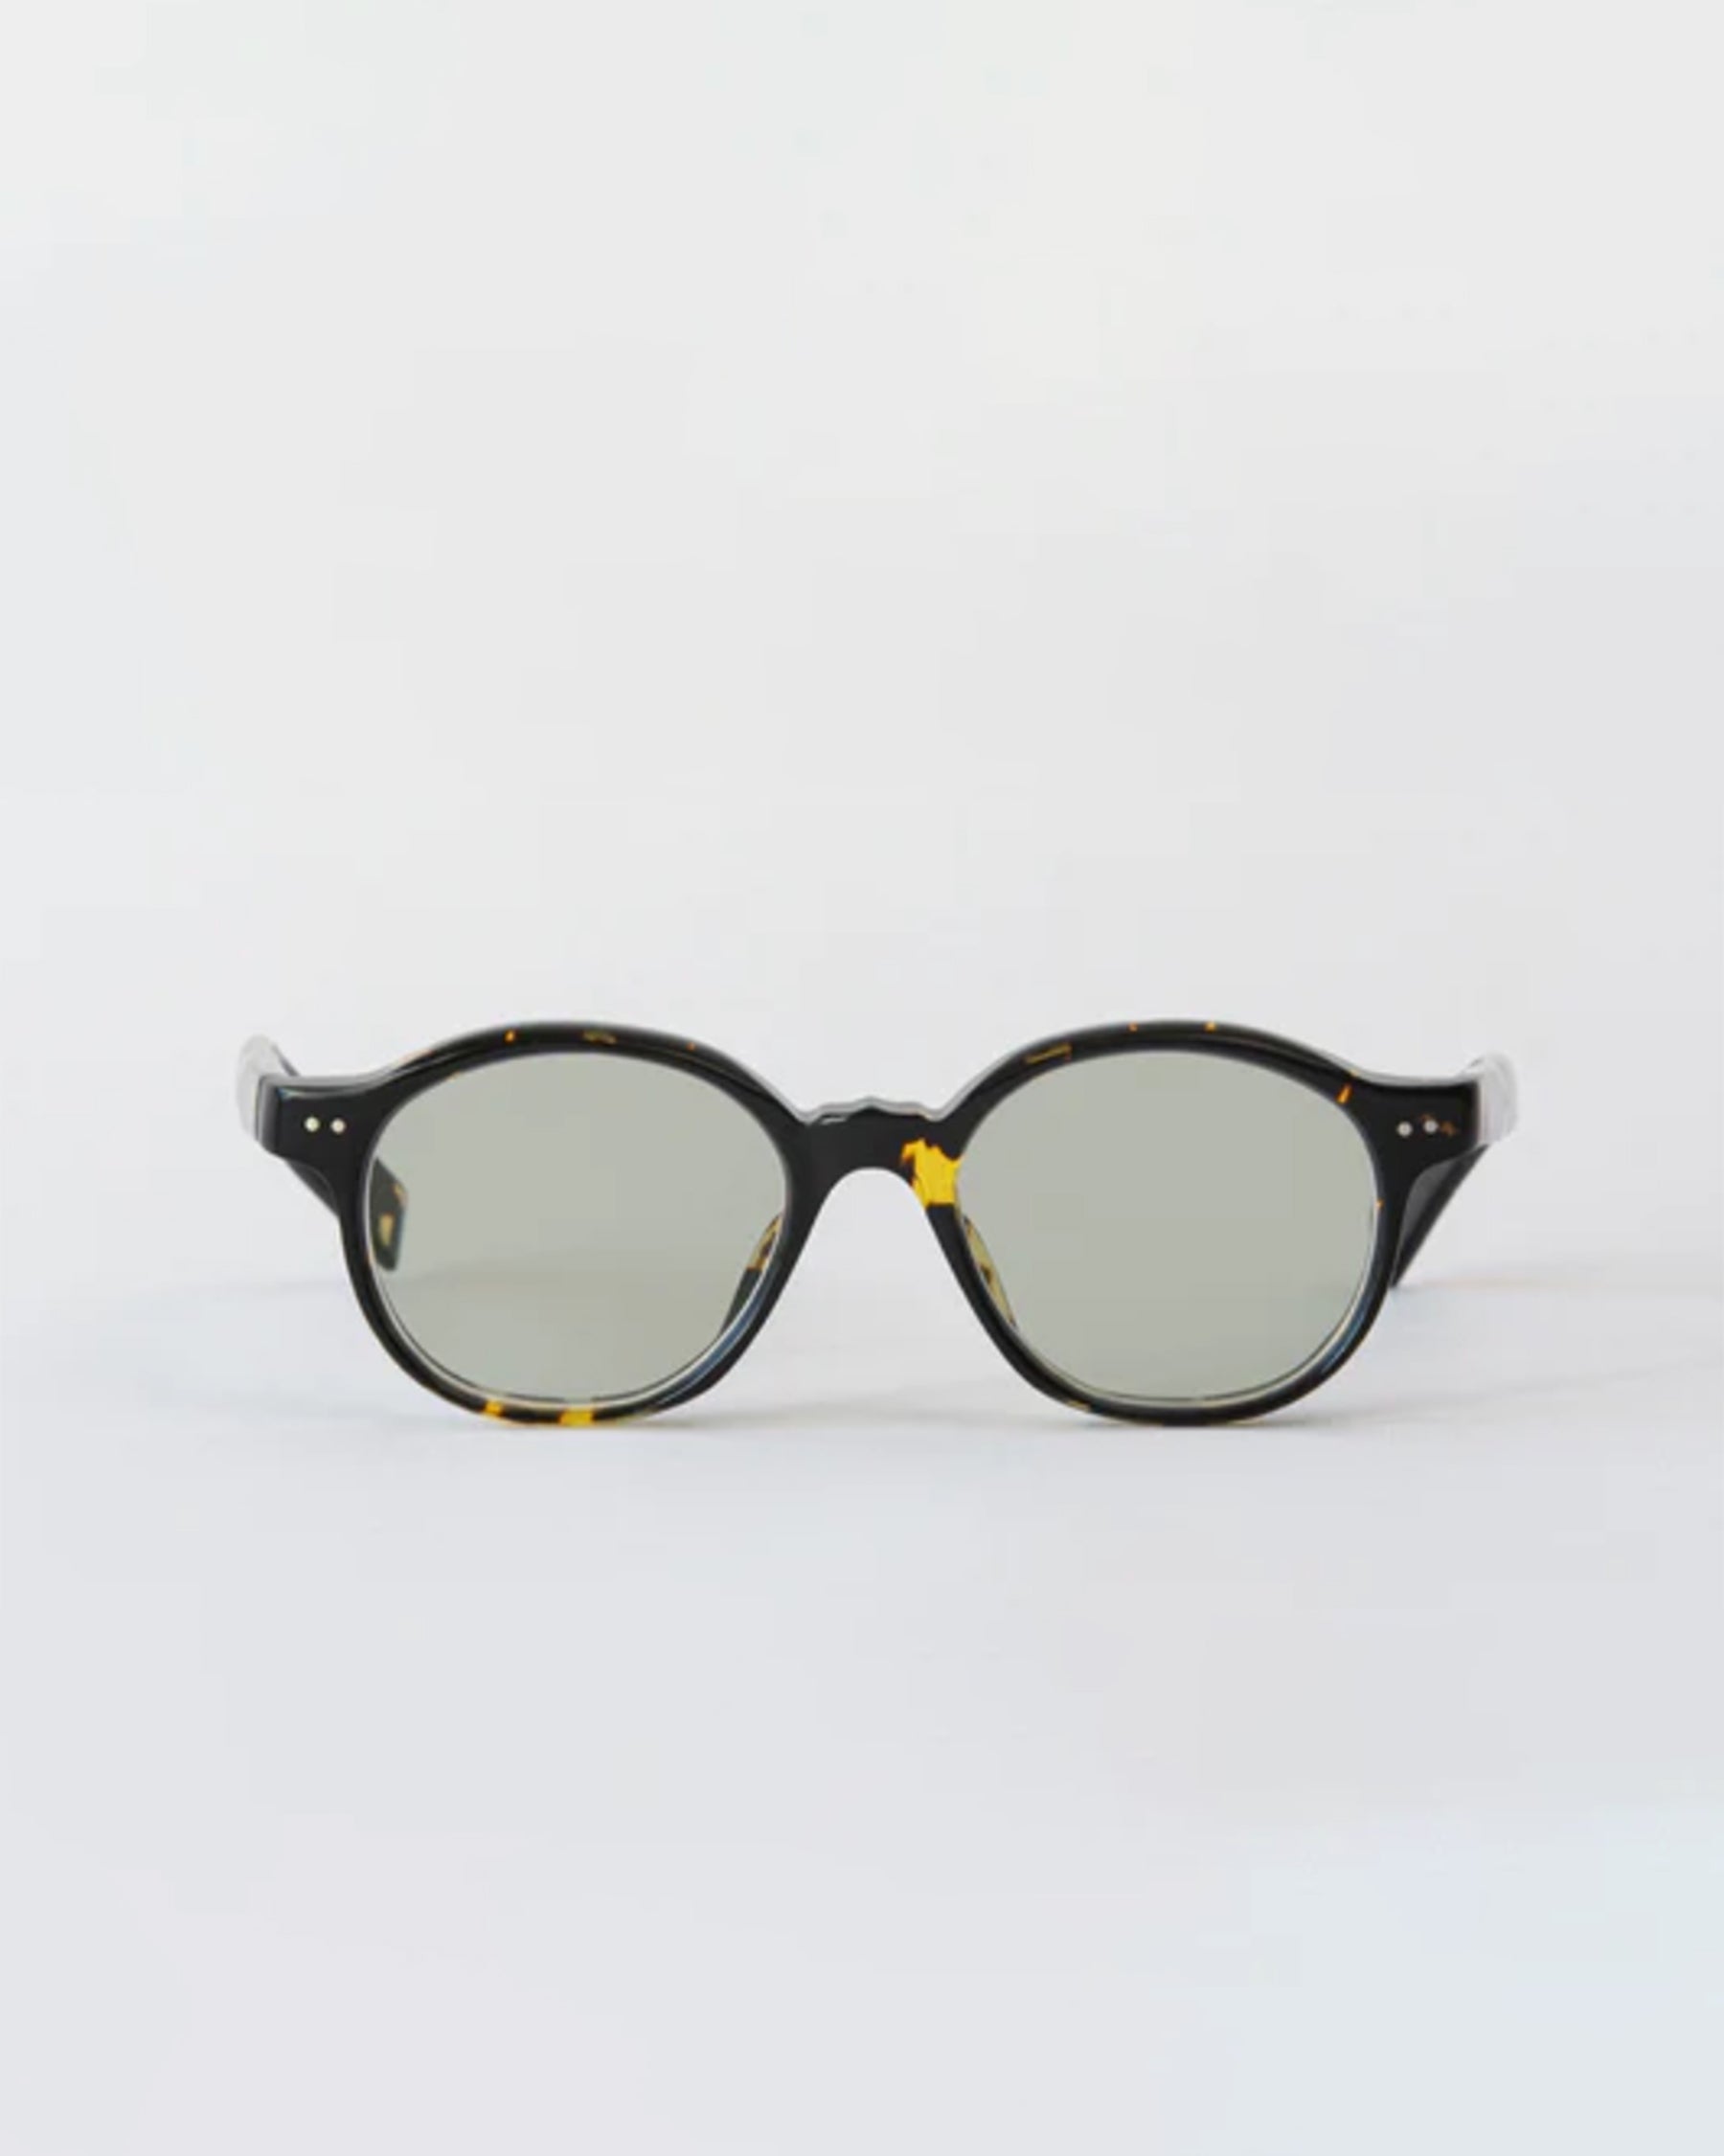 gp-10 Sunglasses ecaille/ Lens: Green